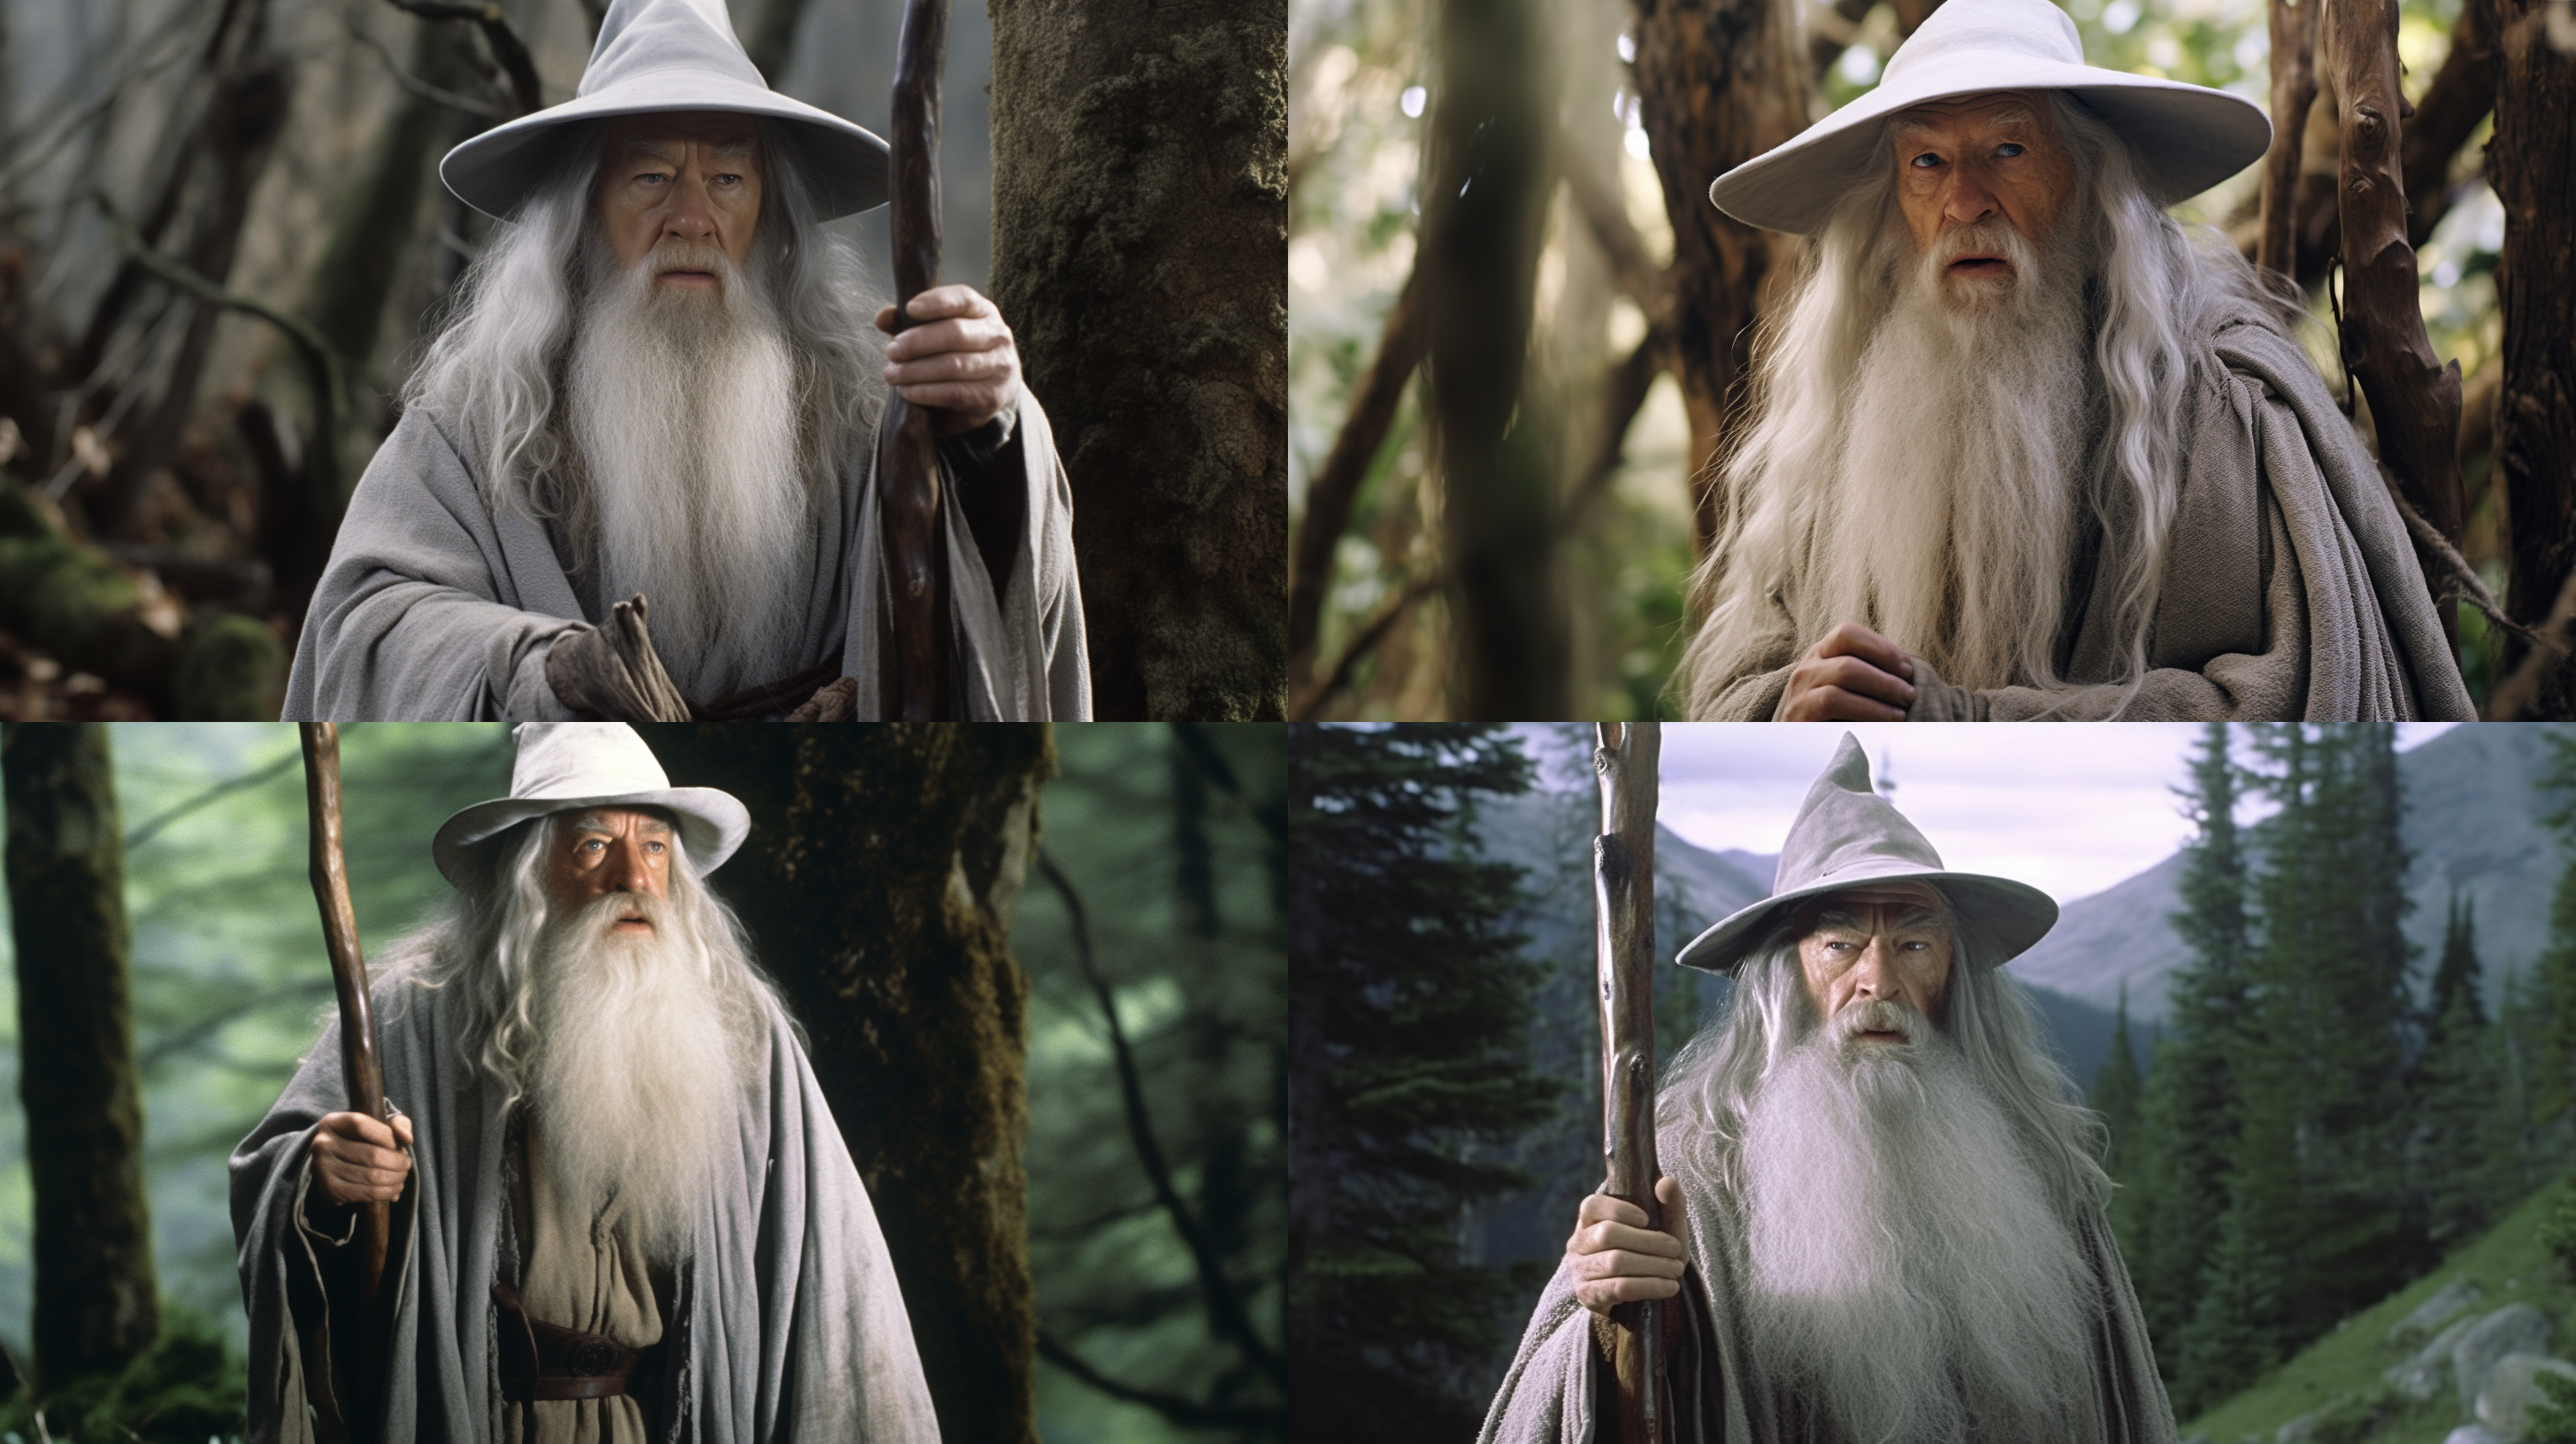 fernando172543 Denholm Helliott dressed up as Gandalf in a film 05536533 ec3d 43e5 a61a 3feab85d559e